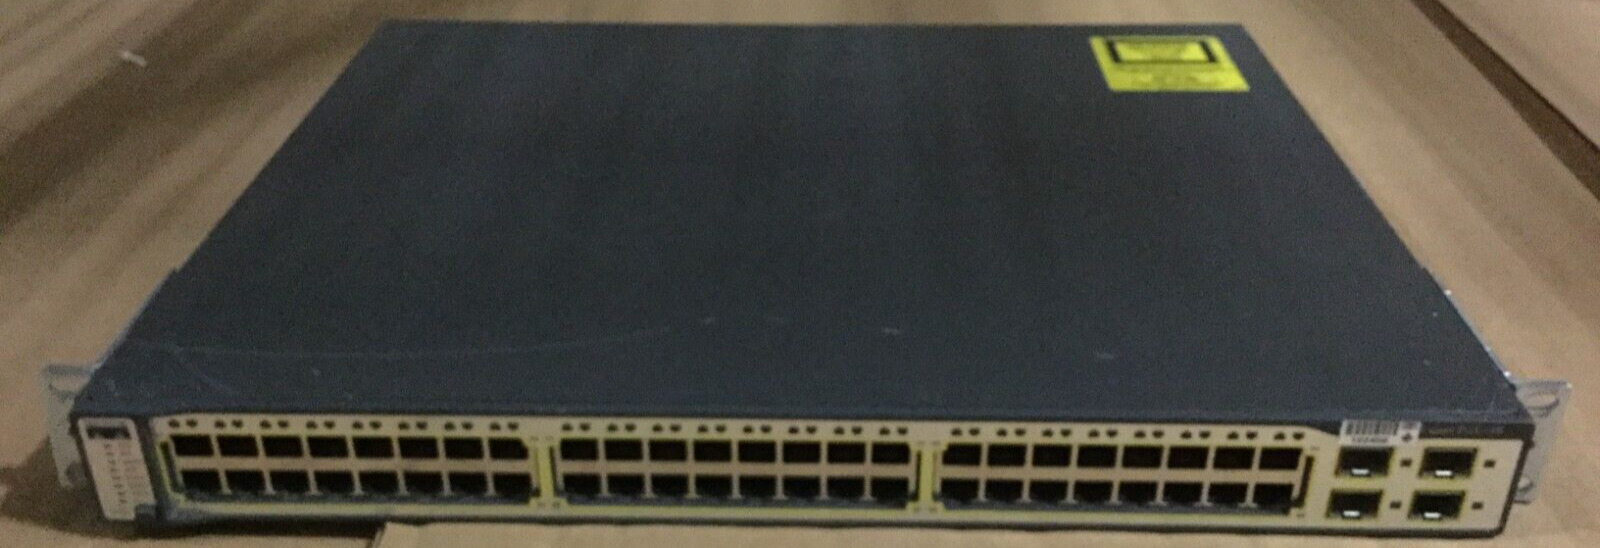 Cisco Catalyst WS-C3750-48PS-S V06 / 3750 Series 48x PoE RJ45 4x SFP+ Switch